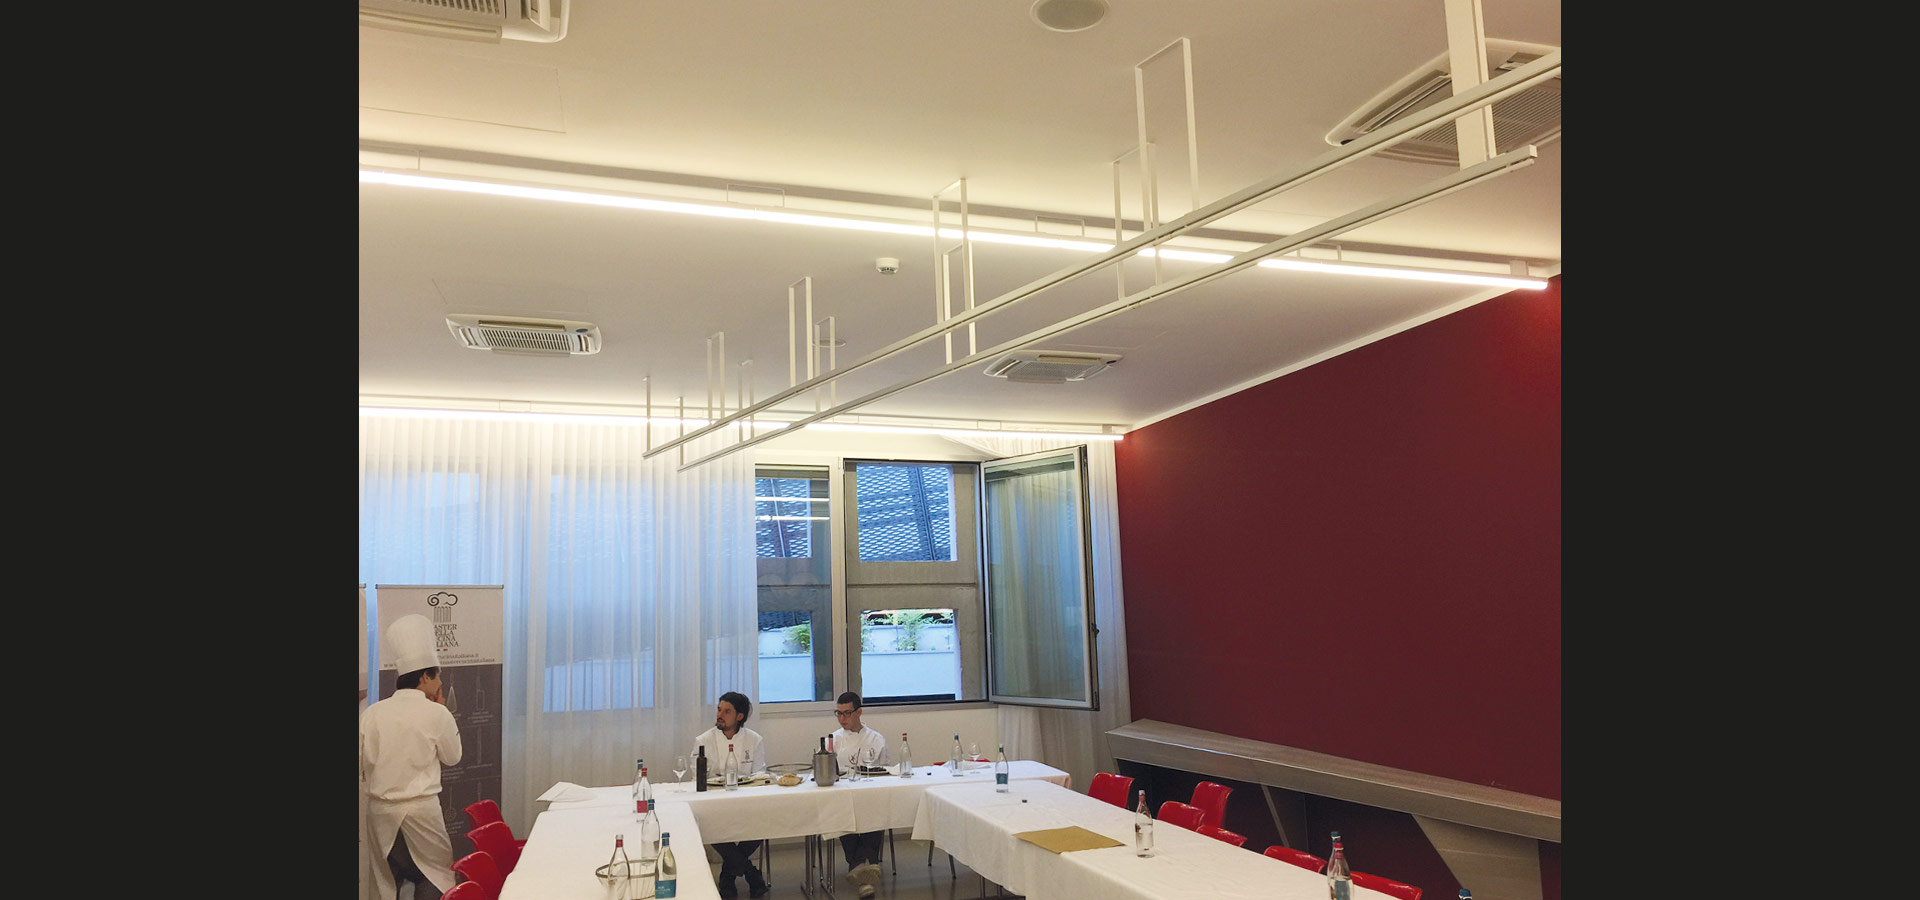 Luxsystem office lighting led lighting training area